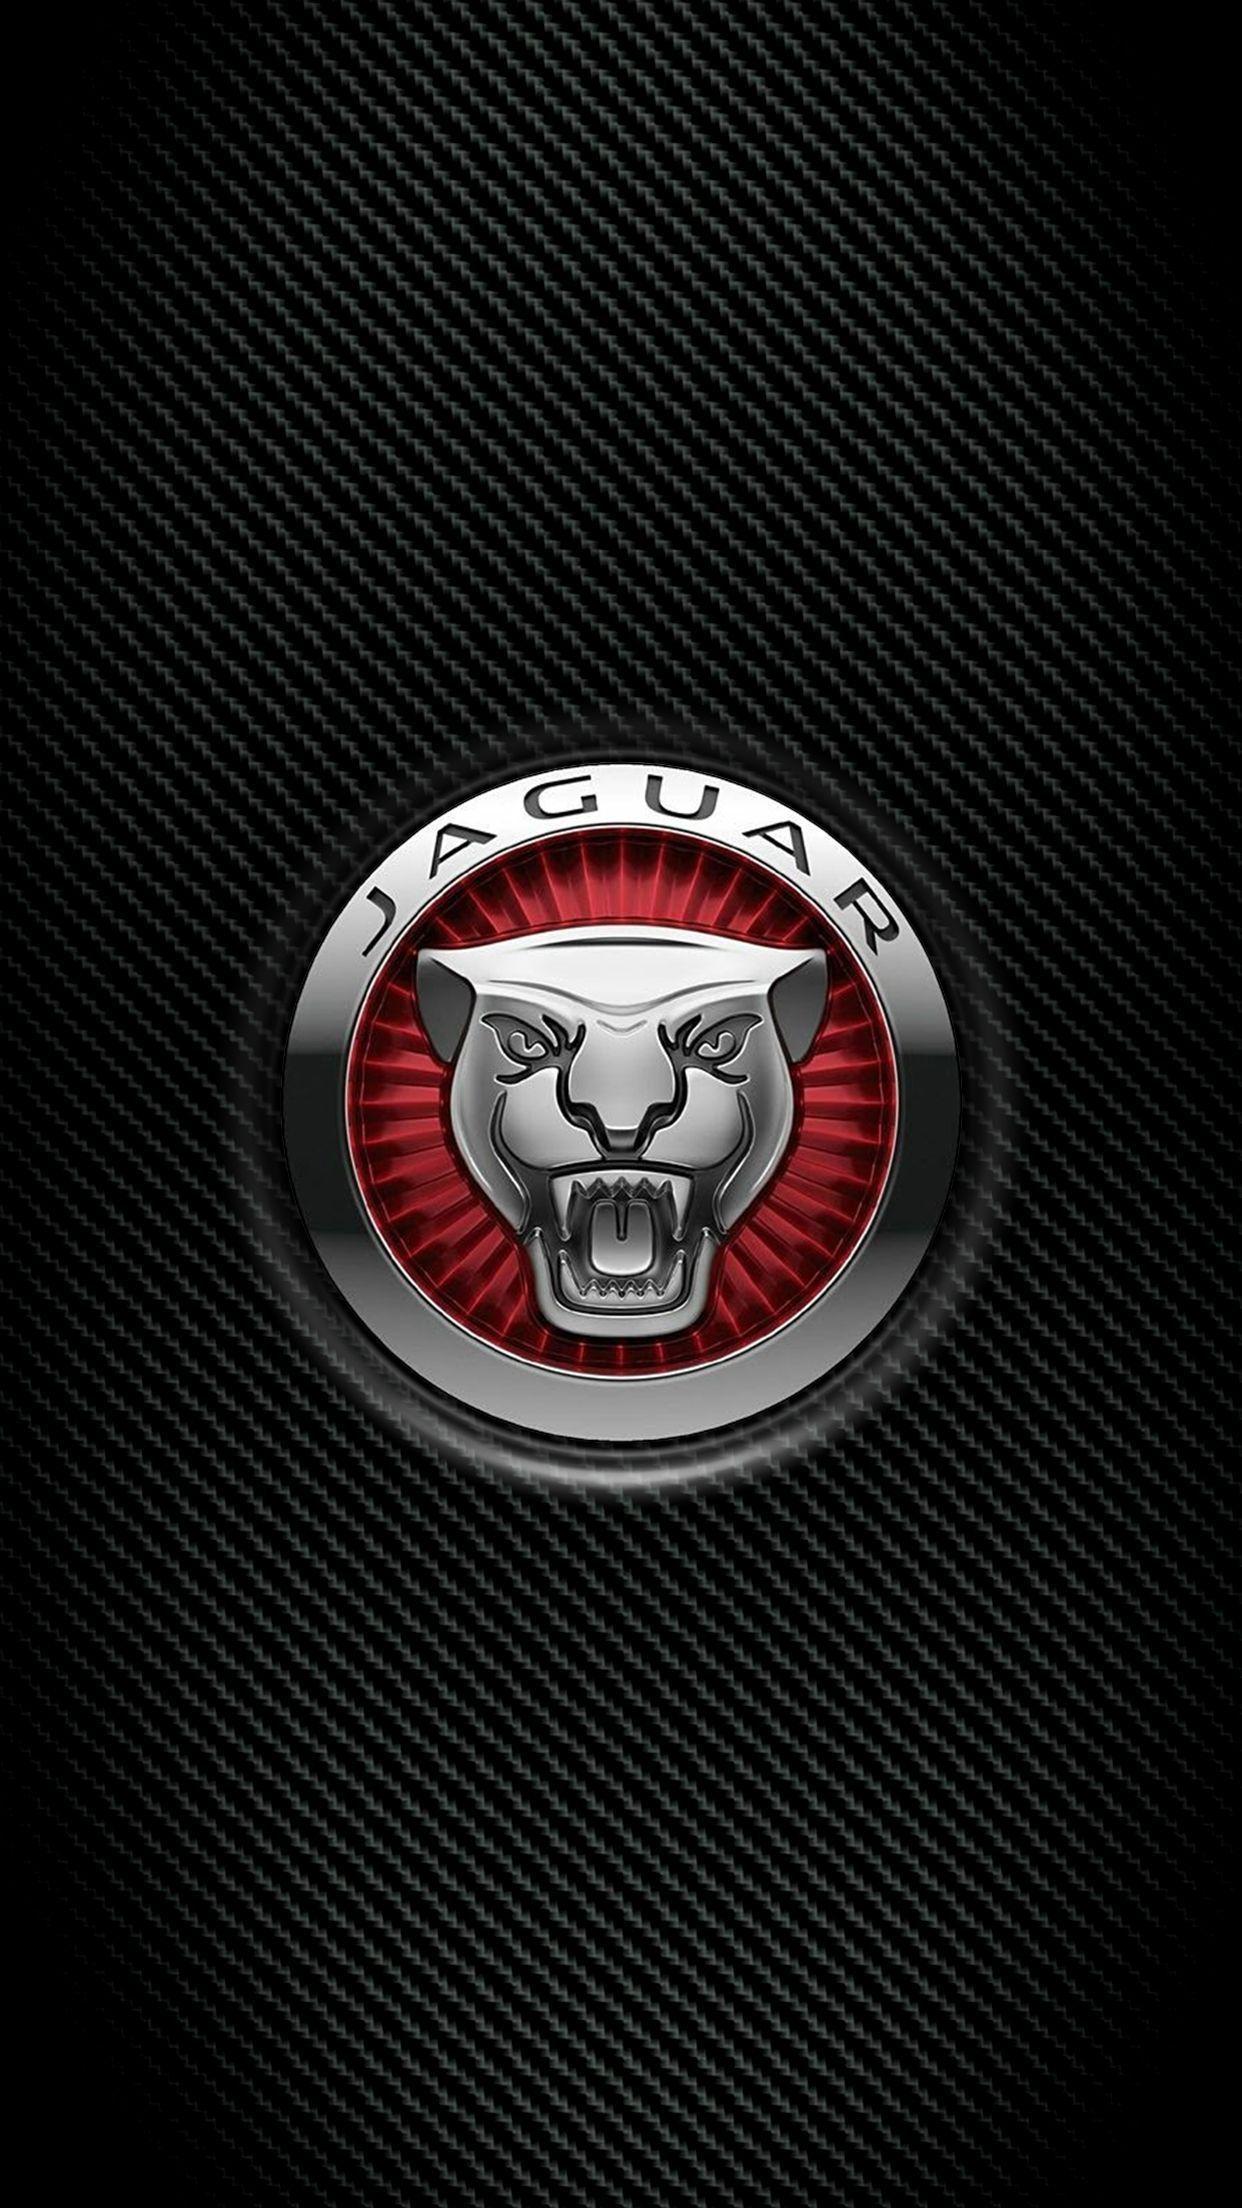 Automotive Import Logo - Jaguar Logo wallpaper/screen saver for smartphone #SmartphoneLogo ...